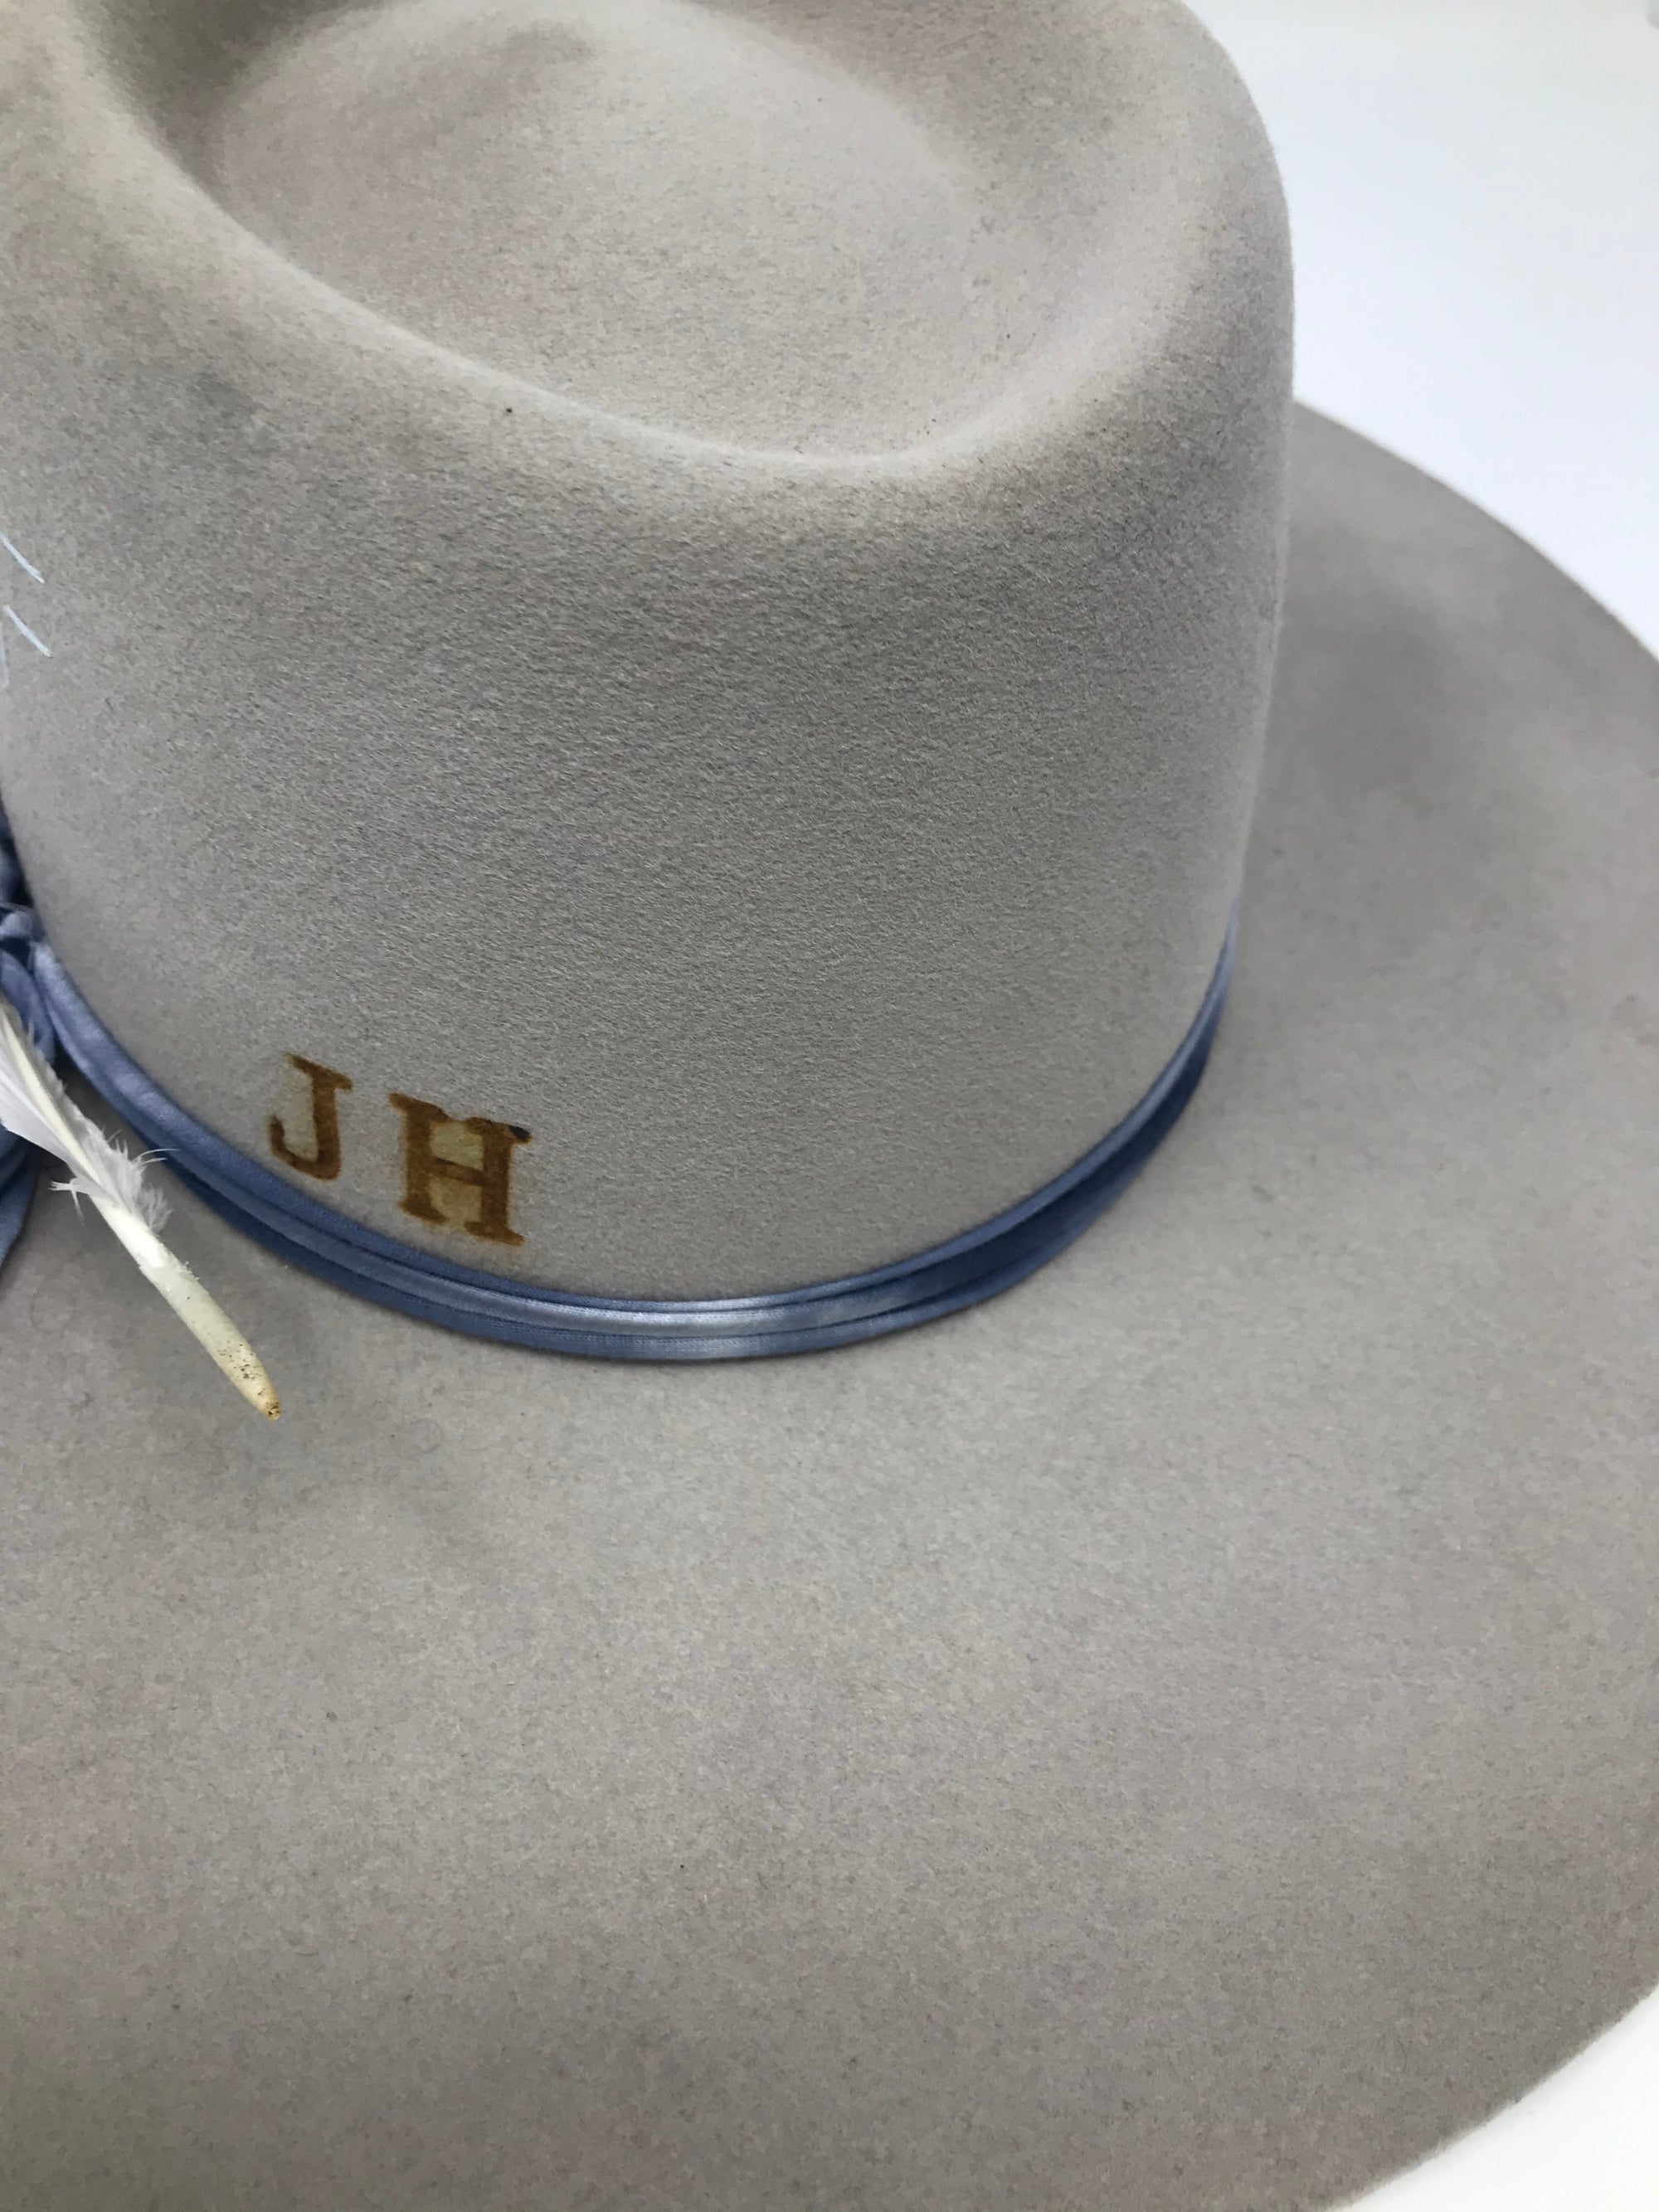 branding will go on the back left of the hat